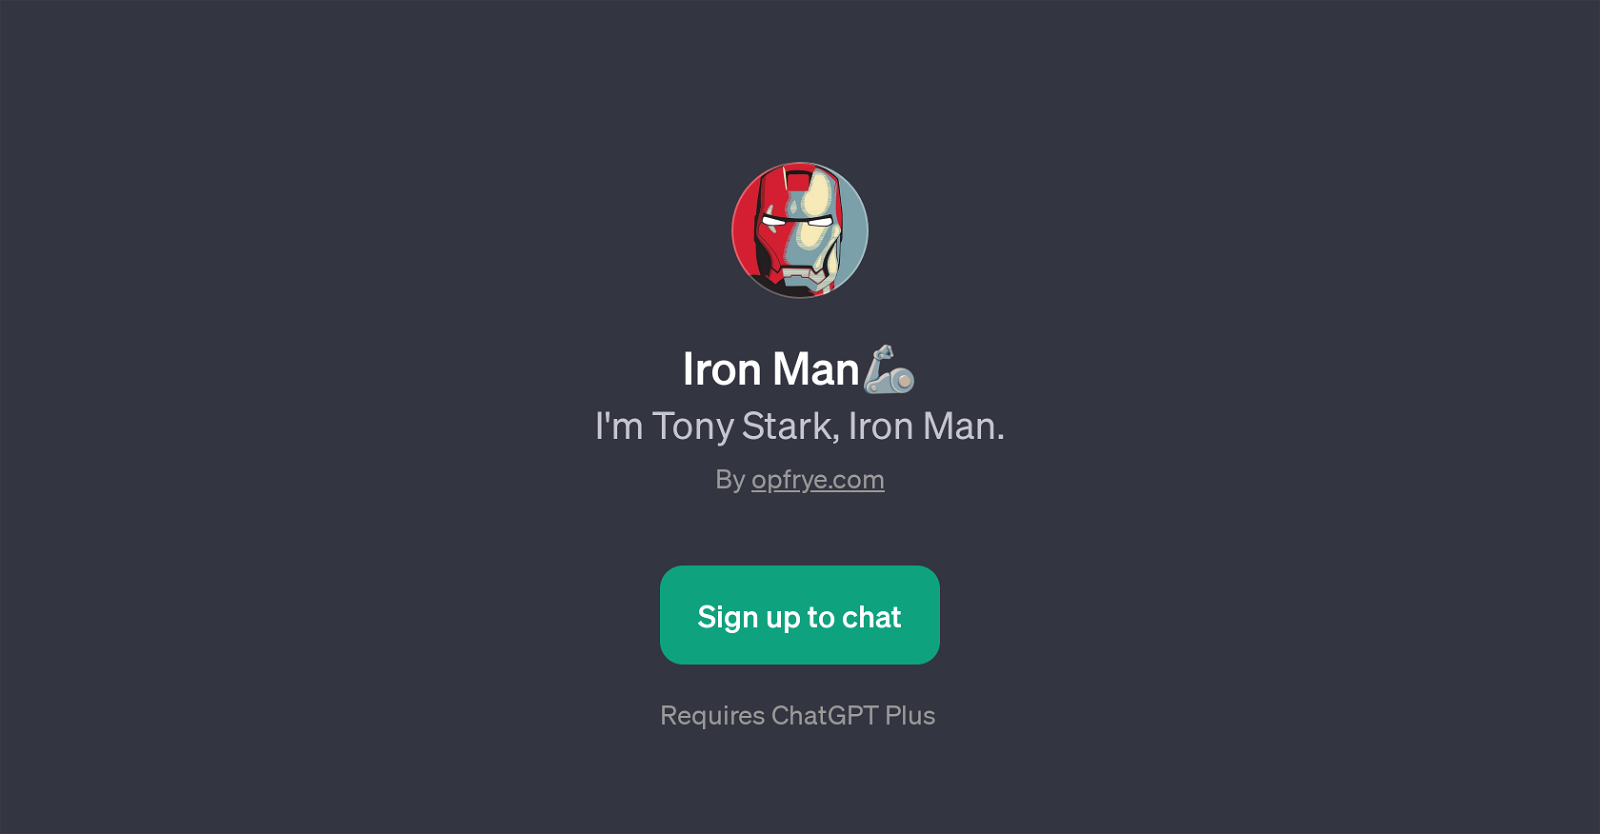 Iron Man website